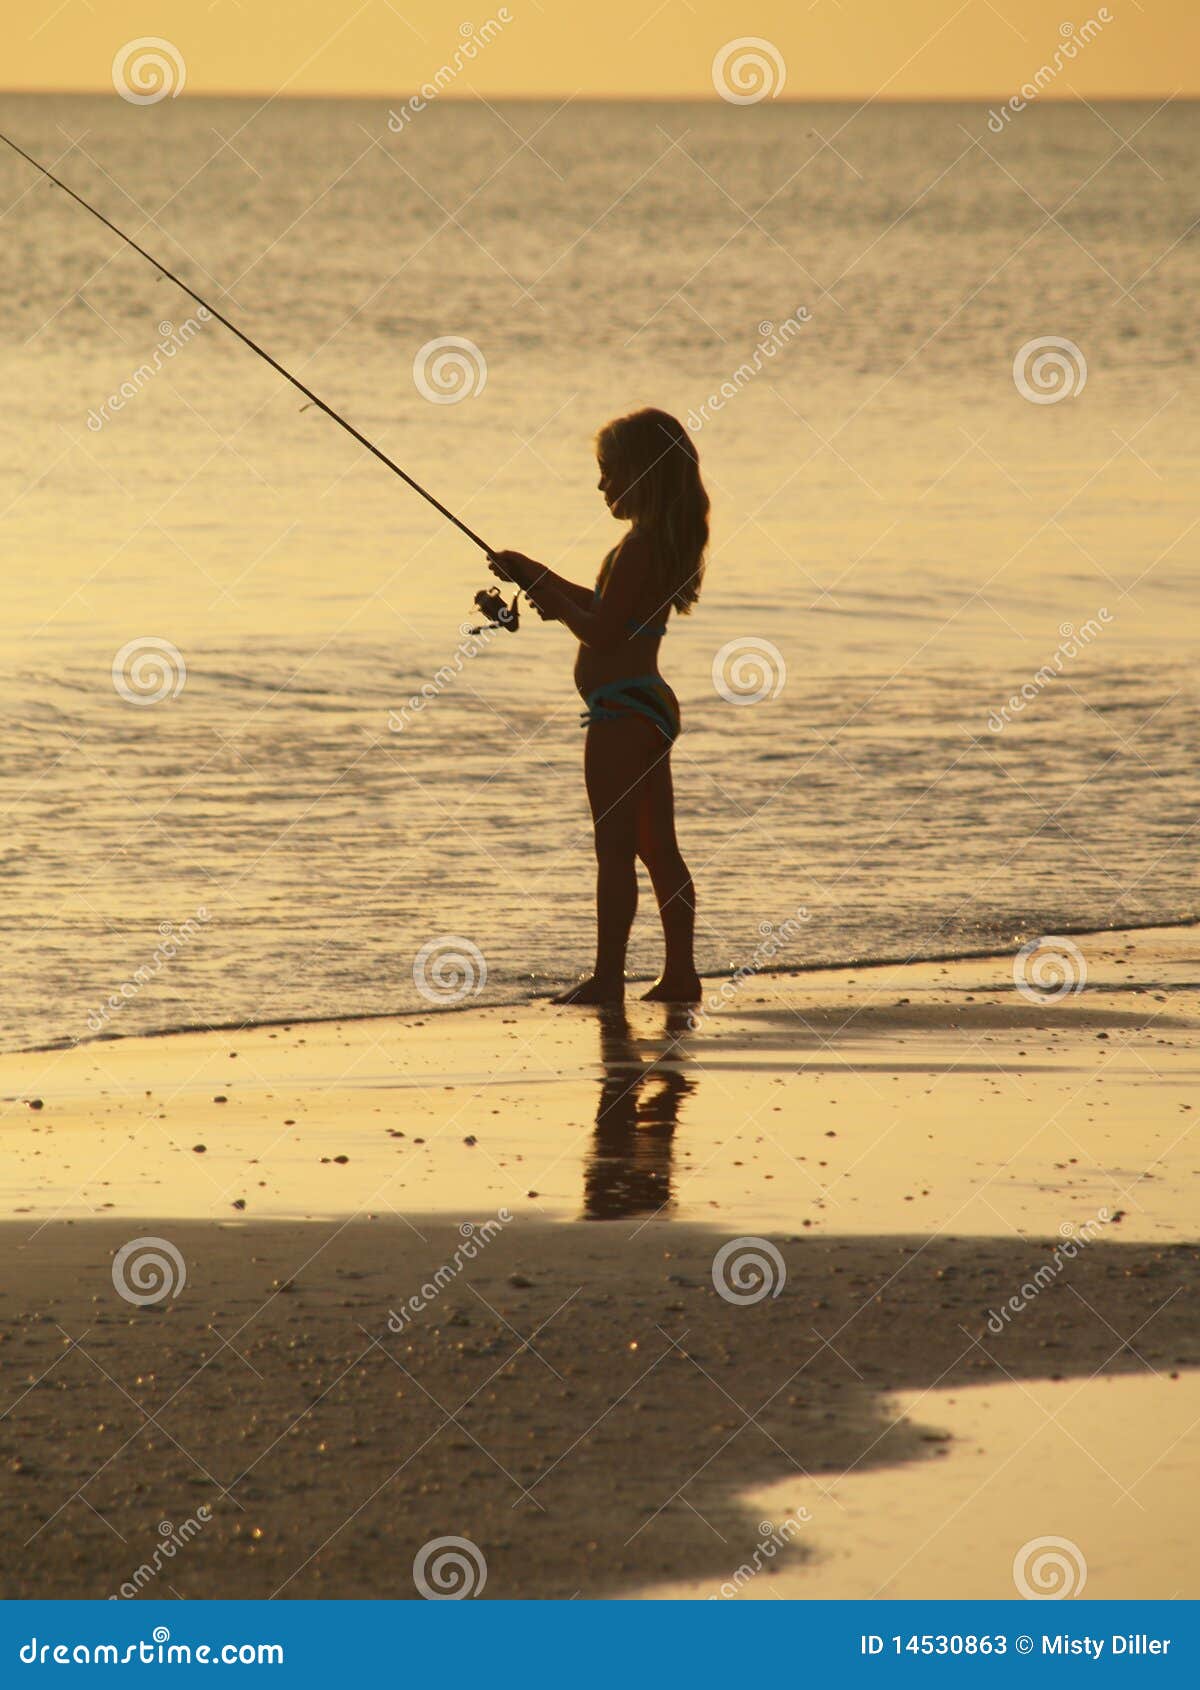 Girl Fishing on Sunset Beach Stock Image - Image of shore, sandy